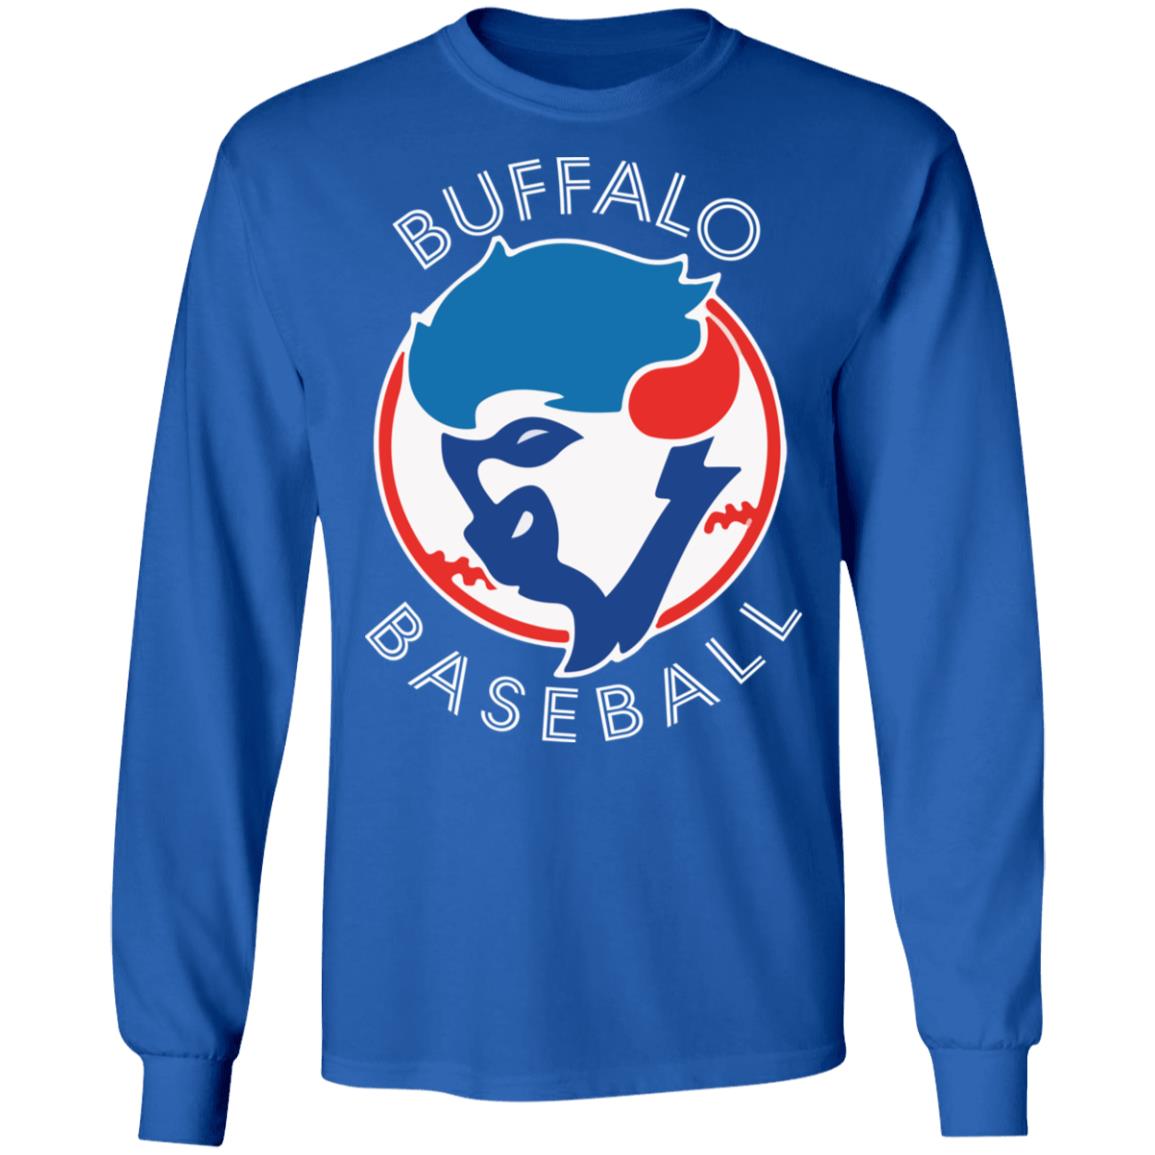 buffalo blue jays shirts